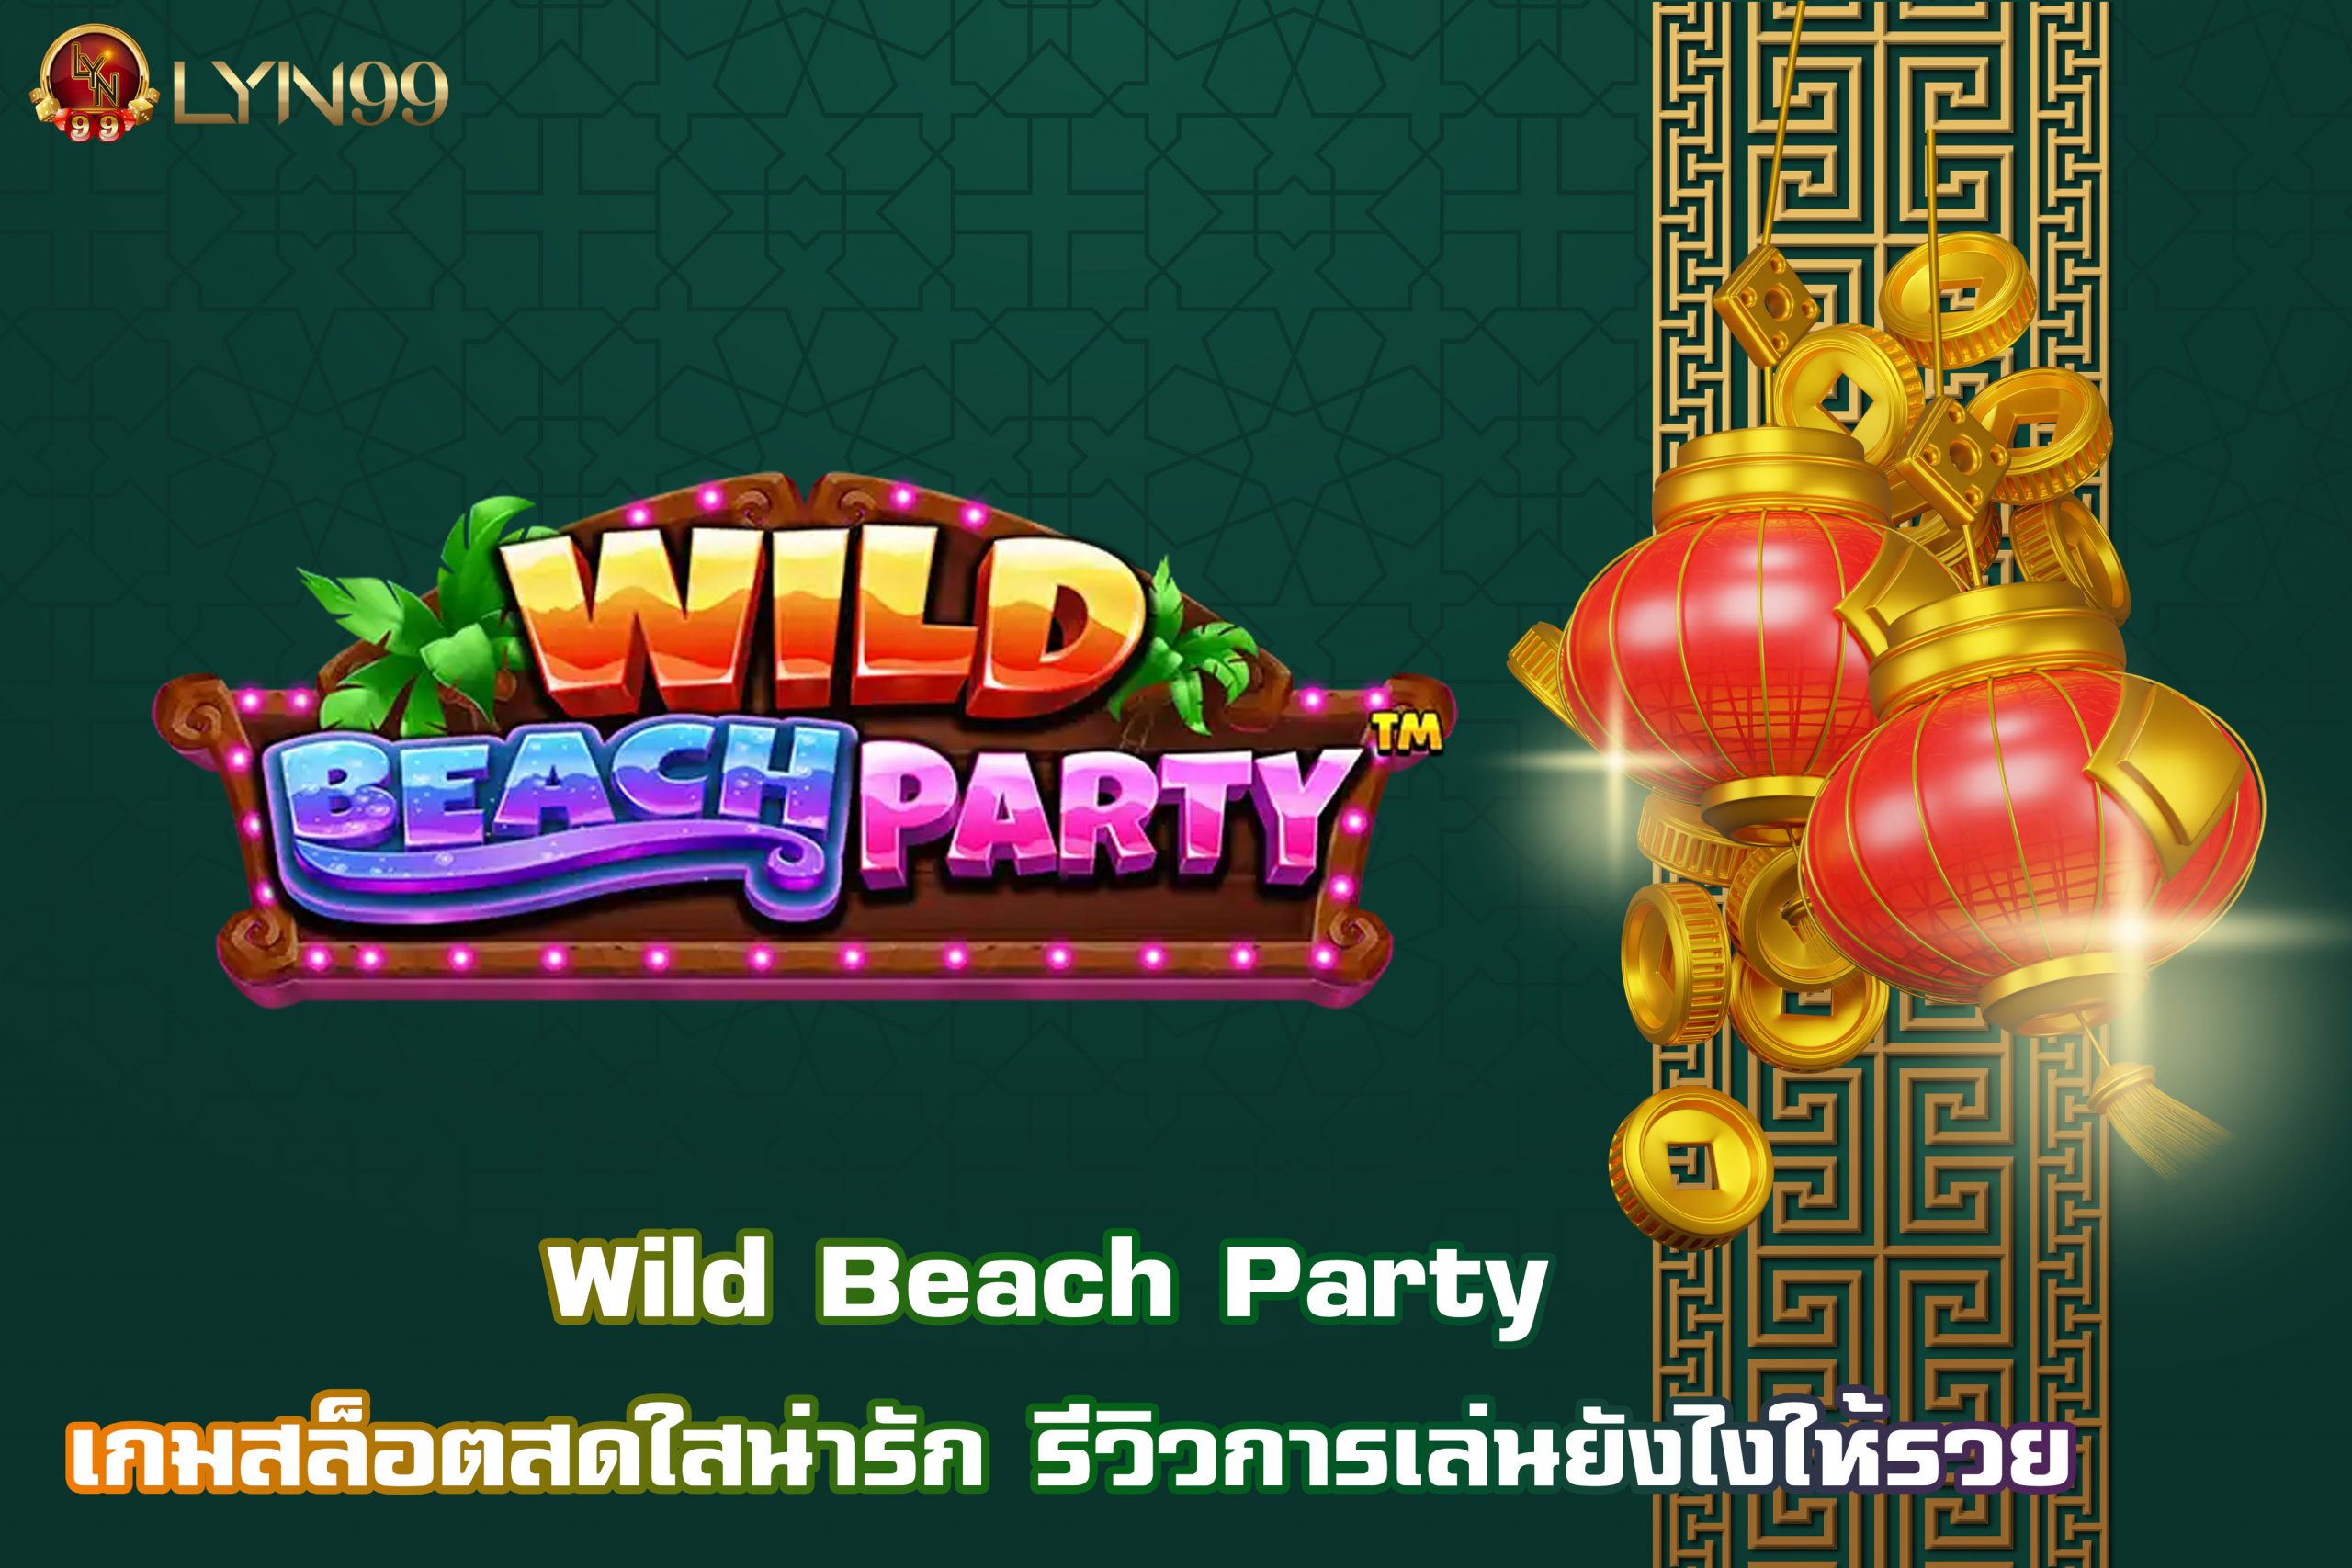 Wild Beach Party เกมสล็อตสดใสน่ารัก รีวิวการเล่นยังไงให้รวย